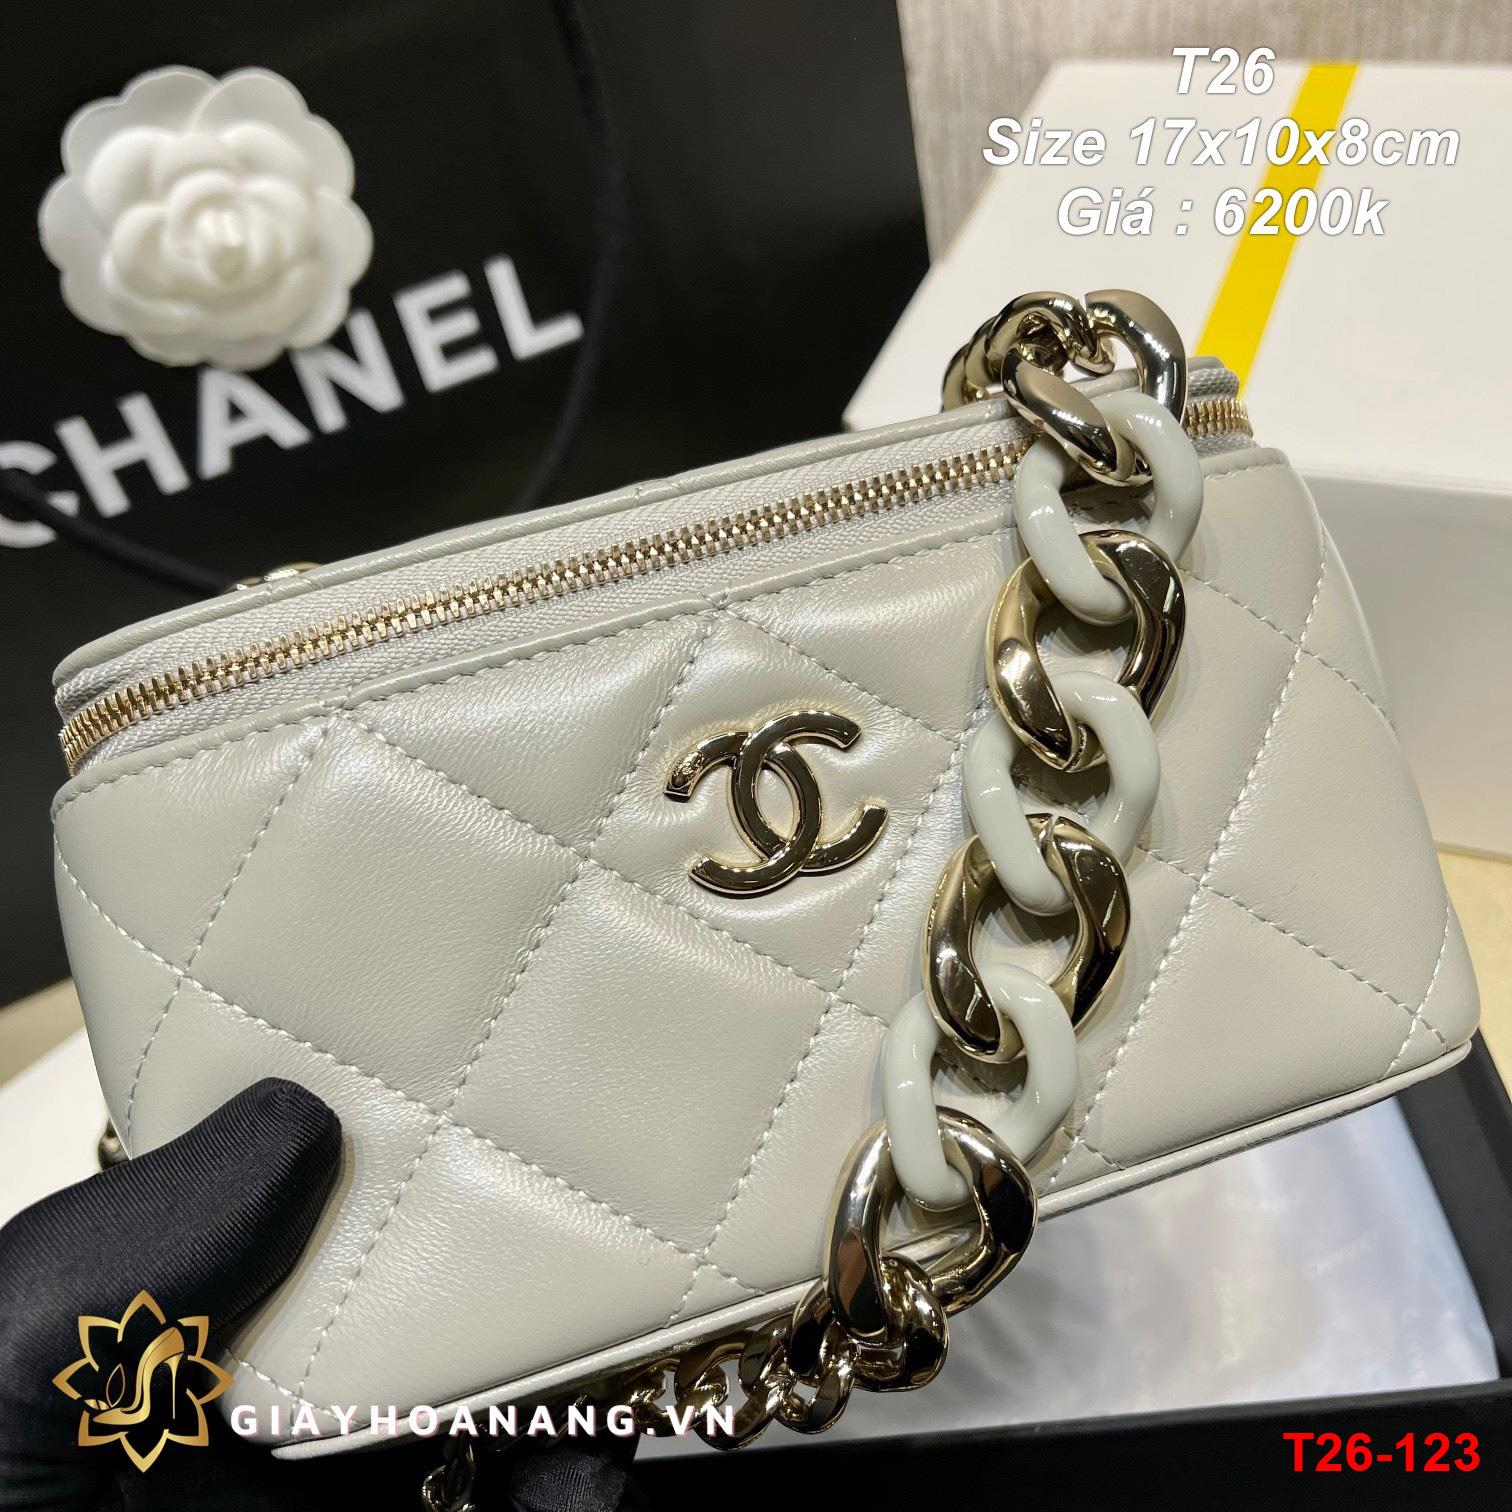 T26-123 Chanel túi size 17cm siêu cấp